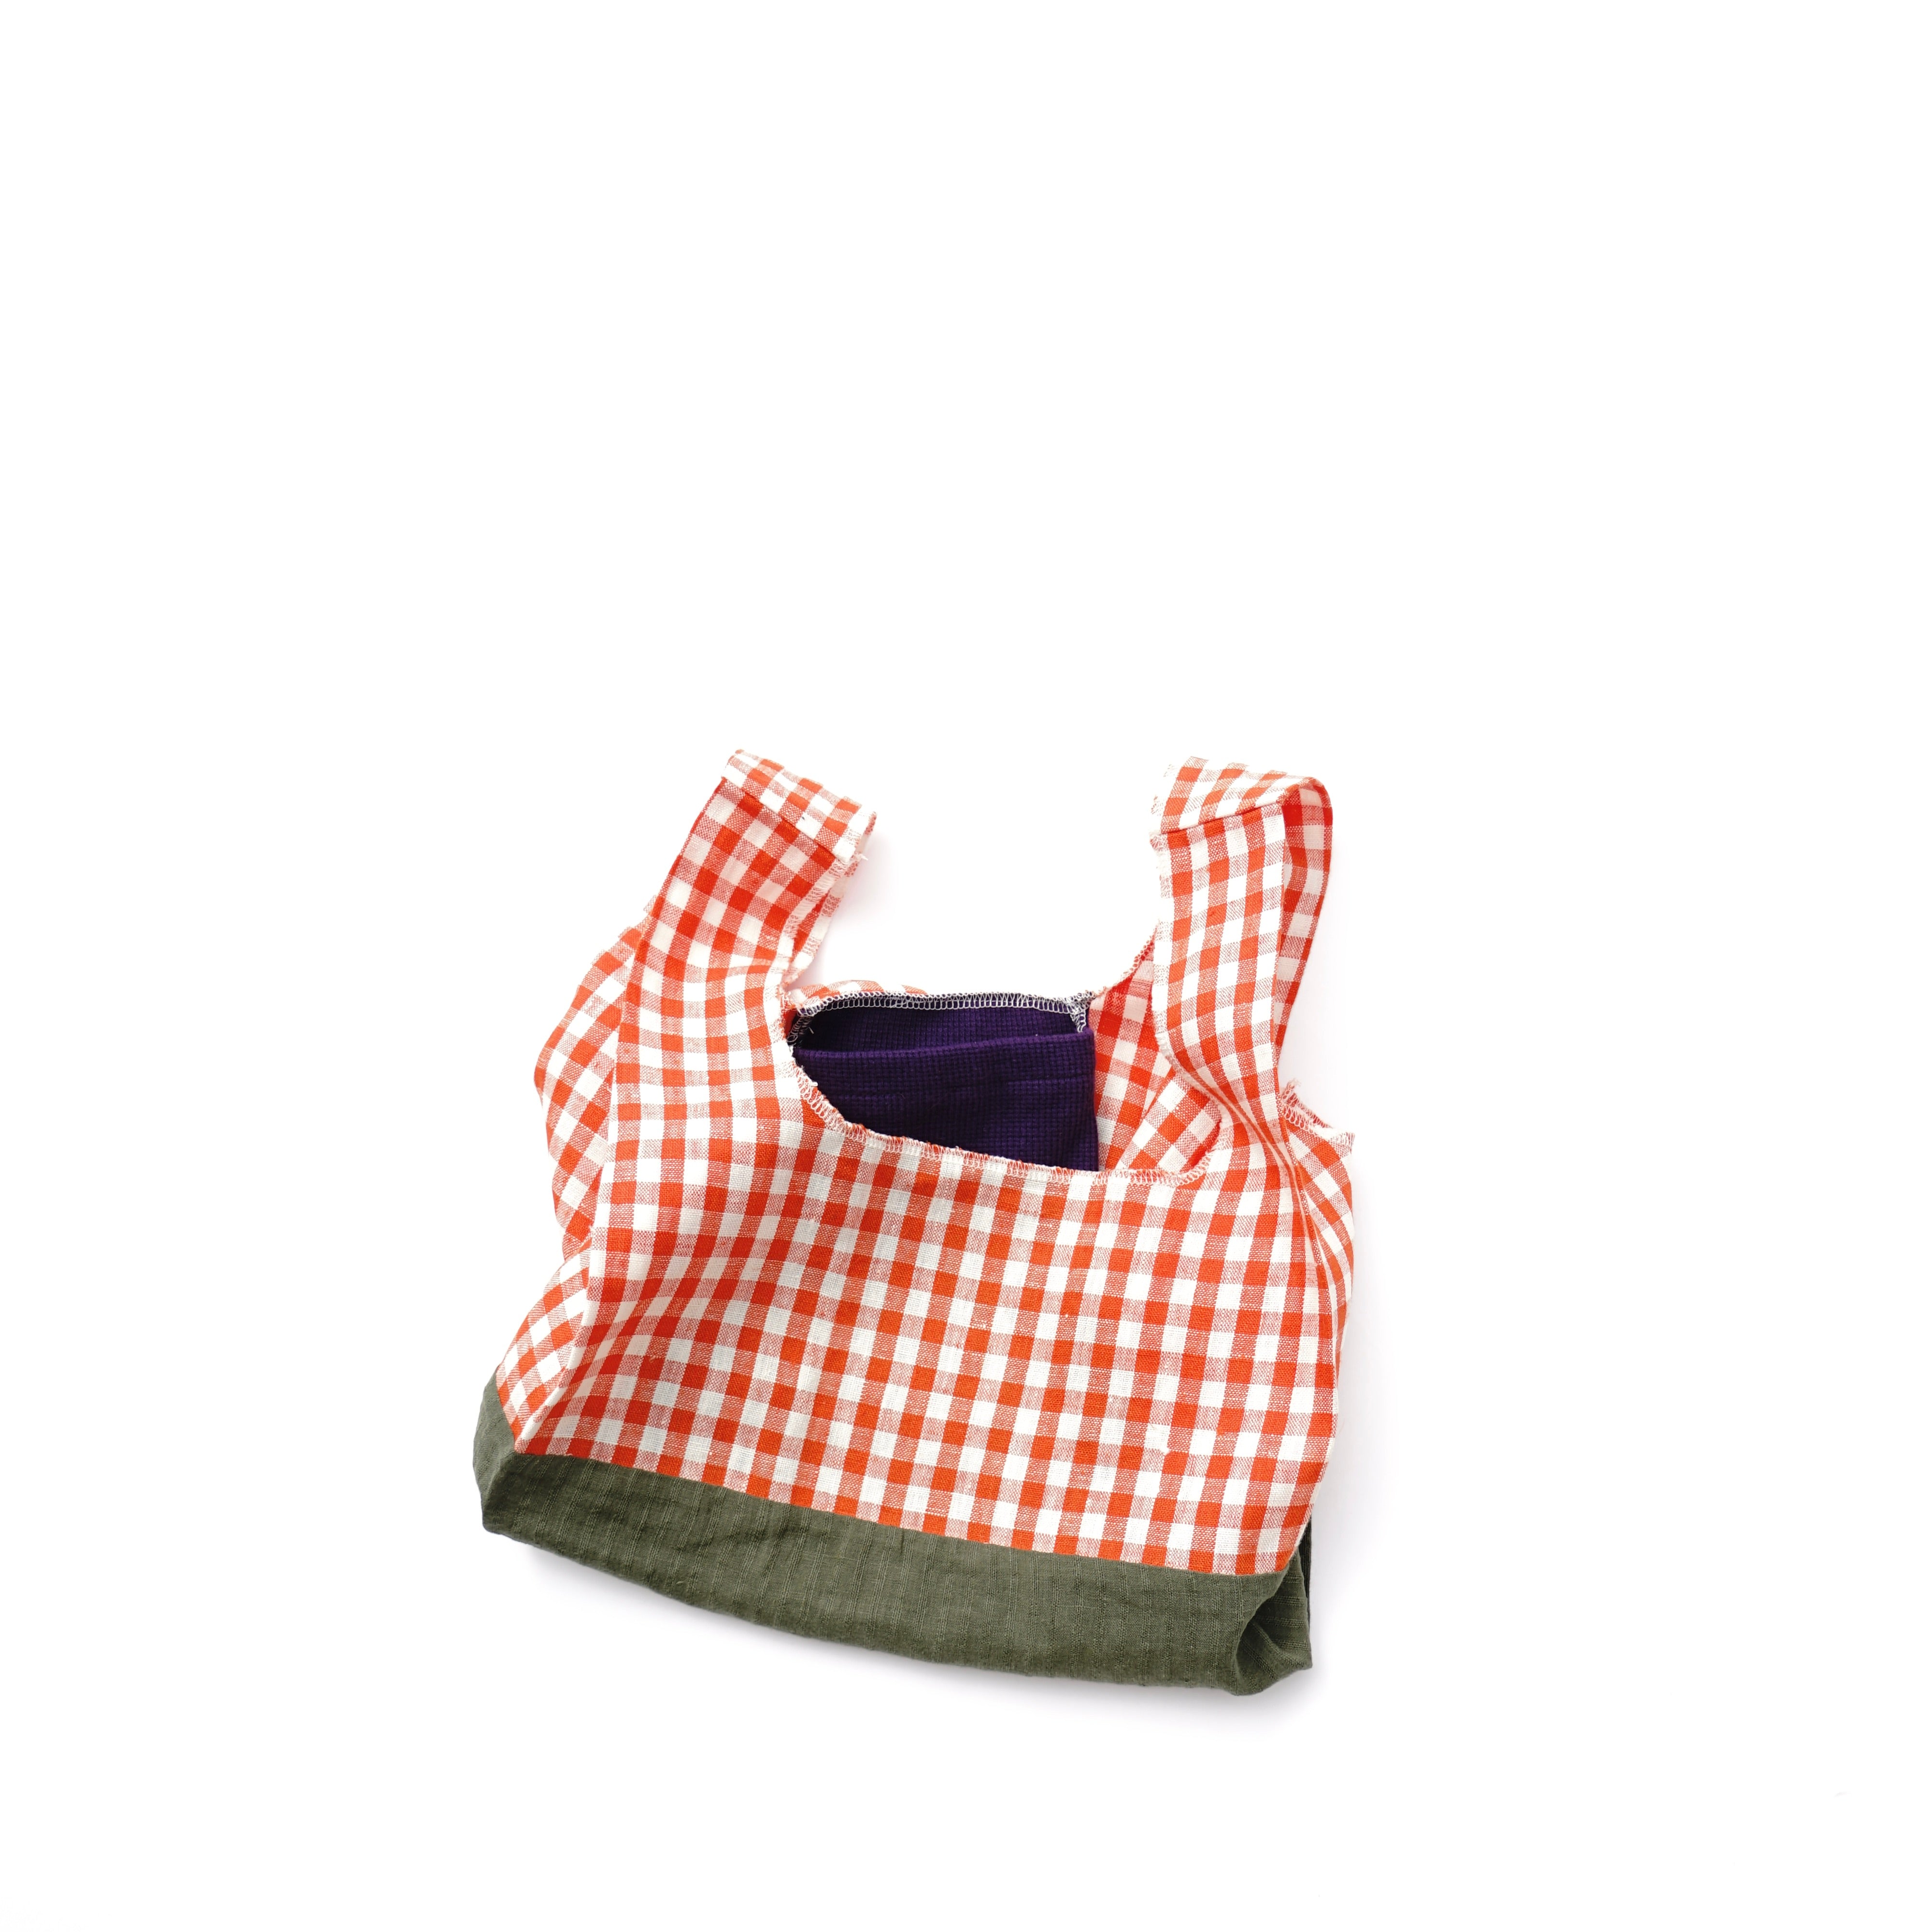 Lunch box bag　orange / 202007ECO03